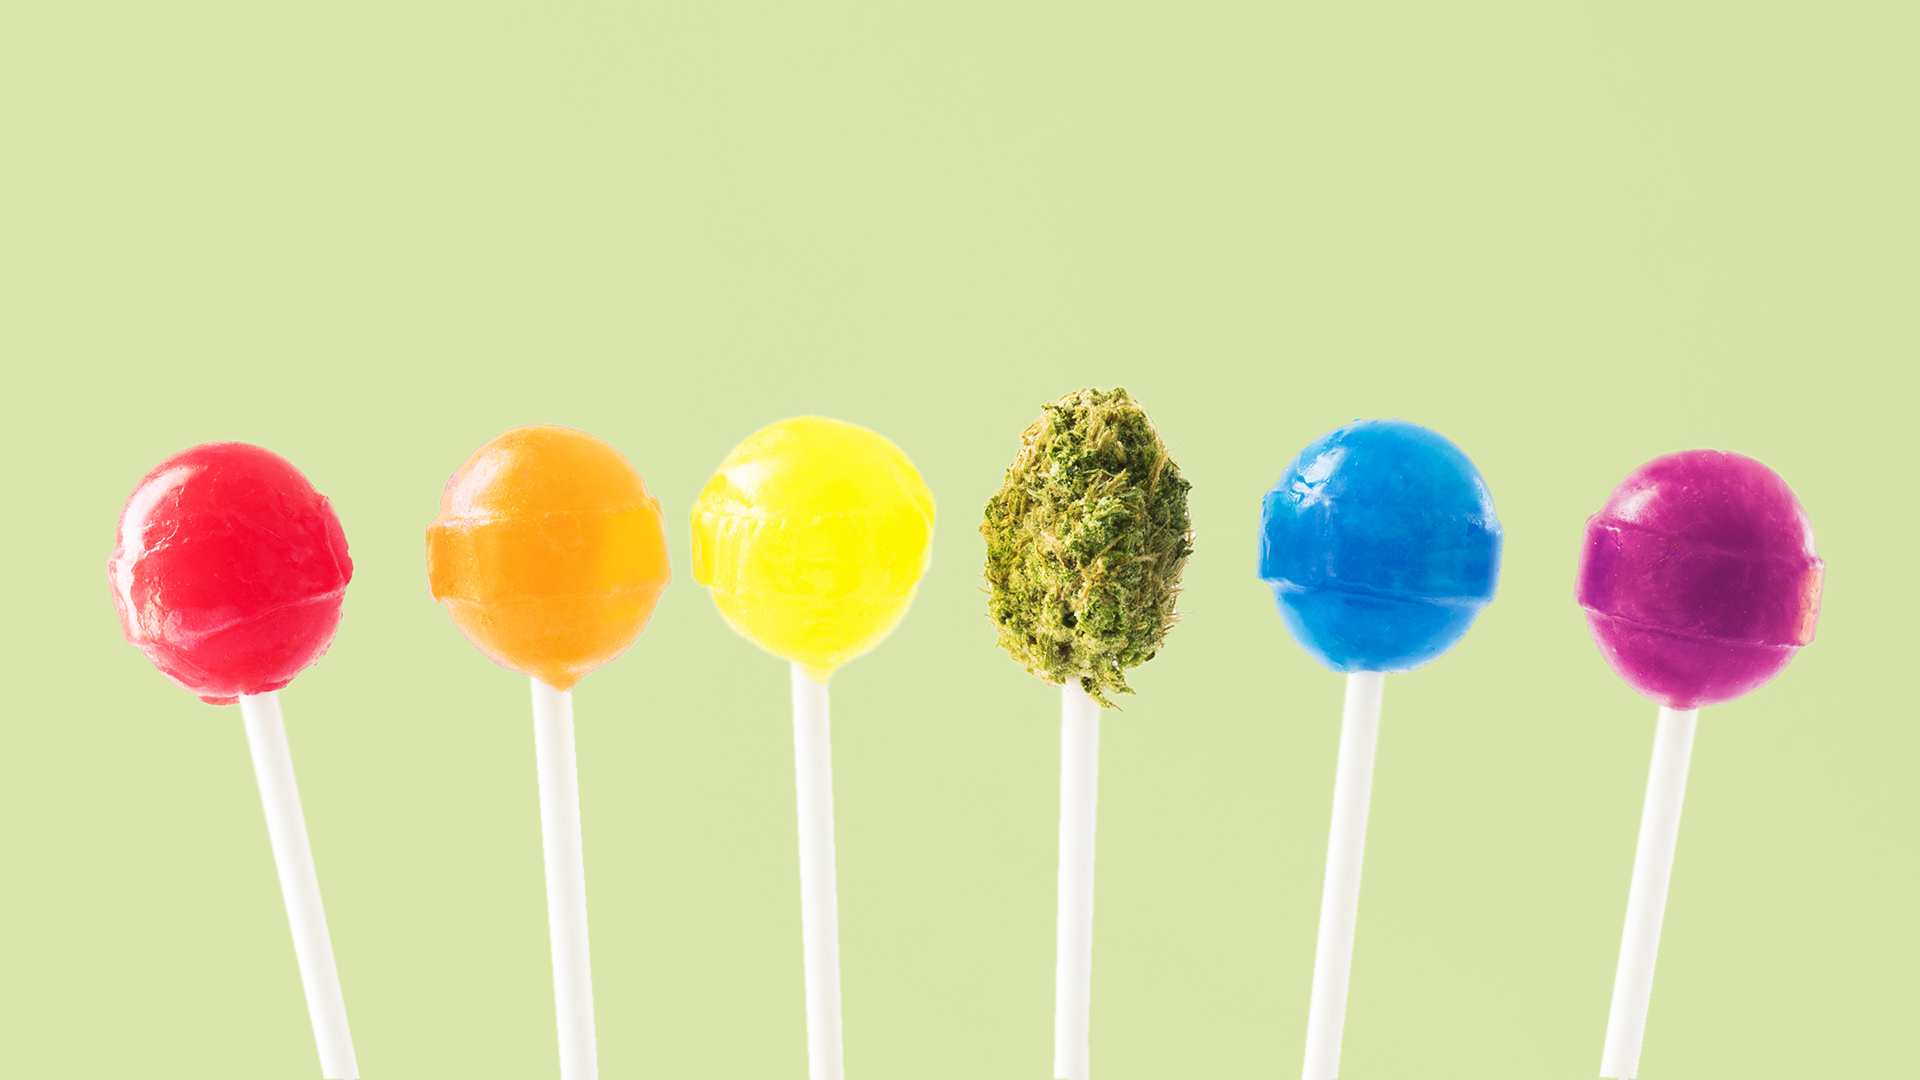 Cannabis edibles are leading Canada's cannabis market in 2020 